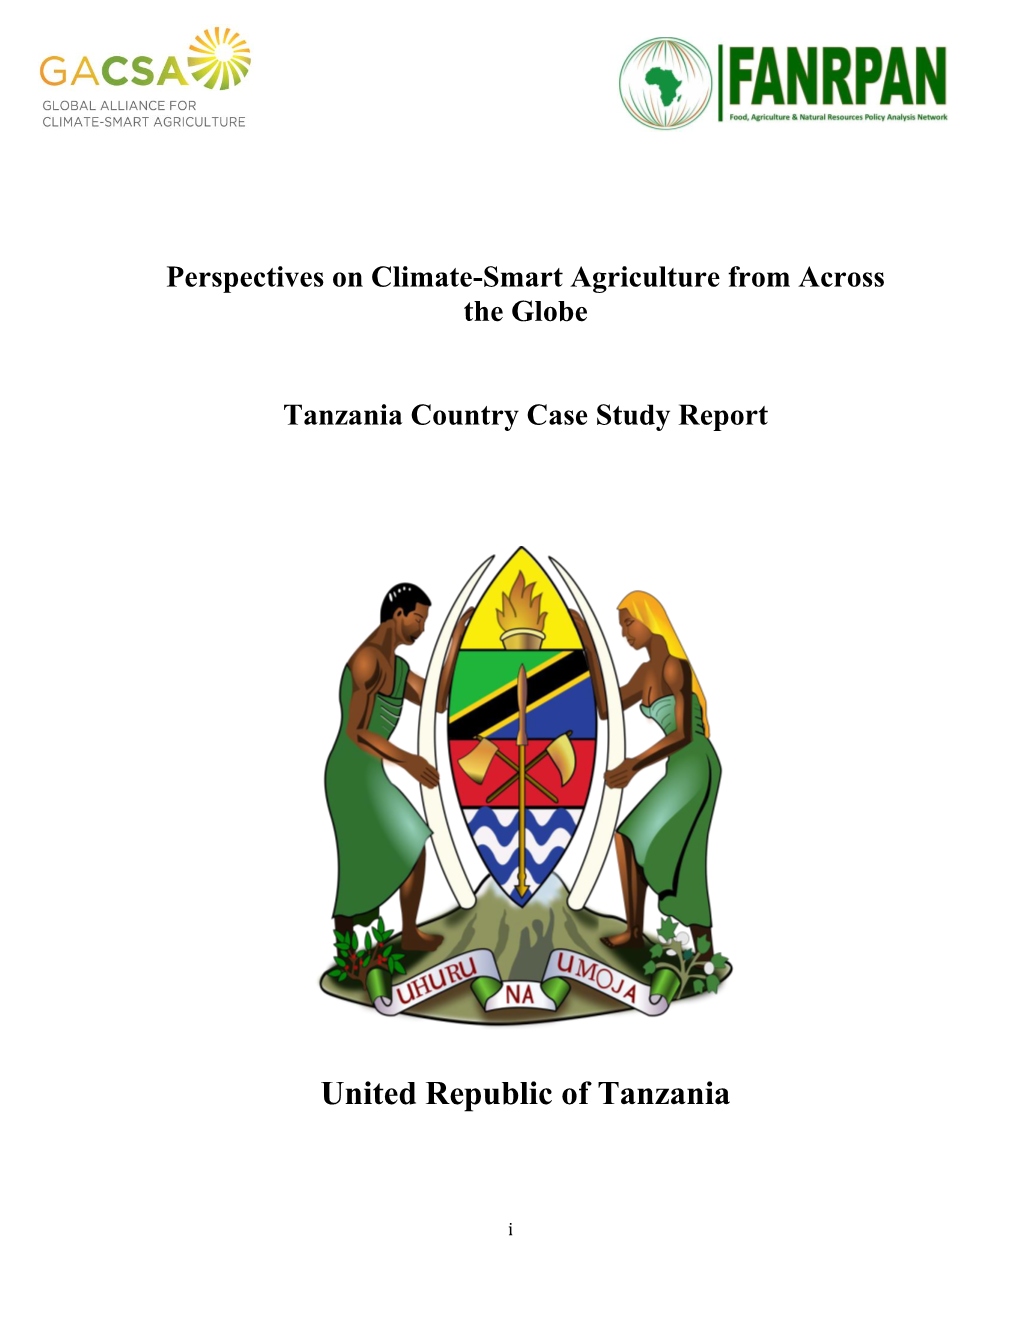 Tanzania Country Case Study Report